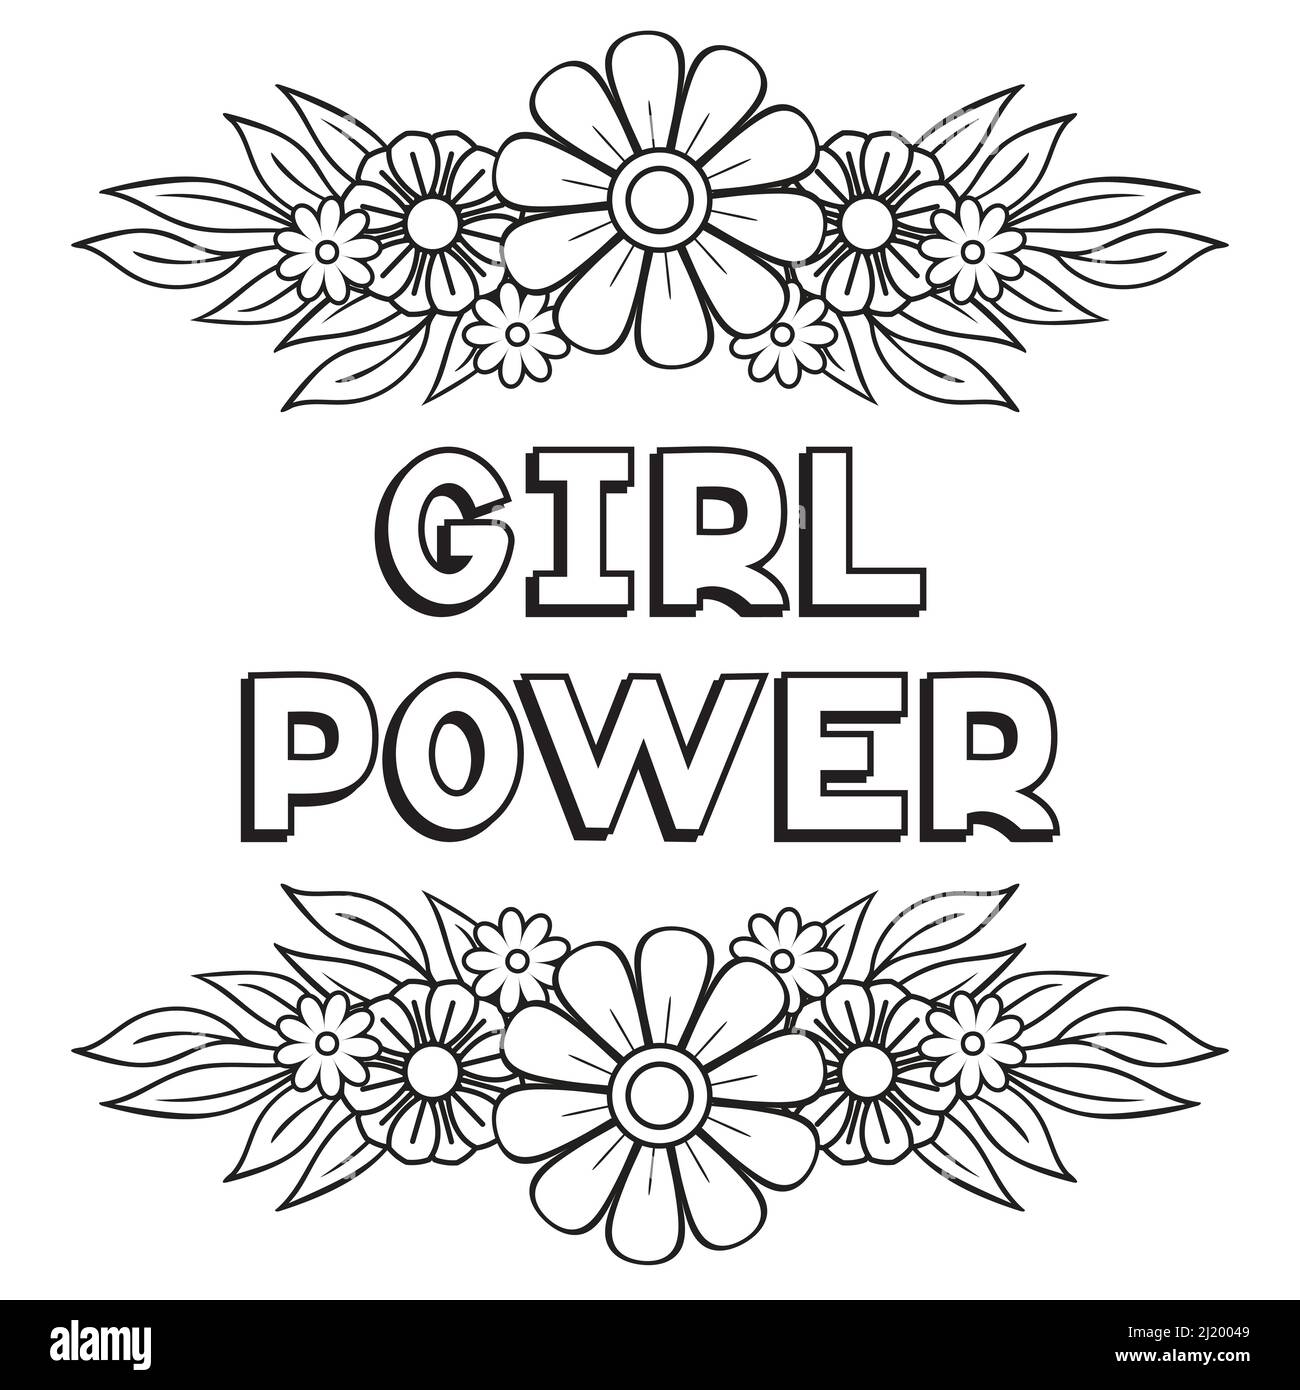 Girl Power Vector Illustration Stock Vector